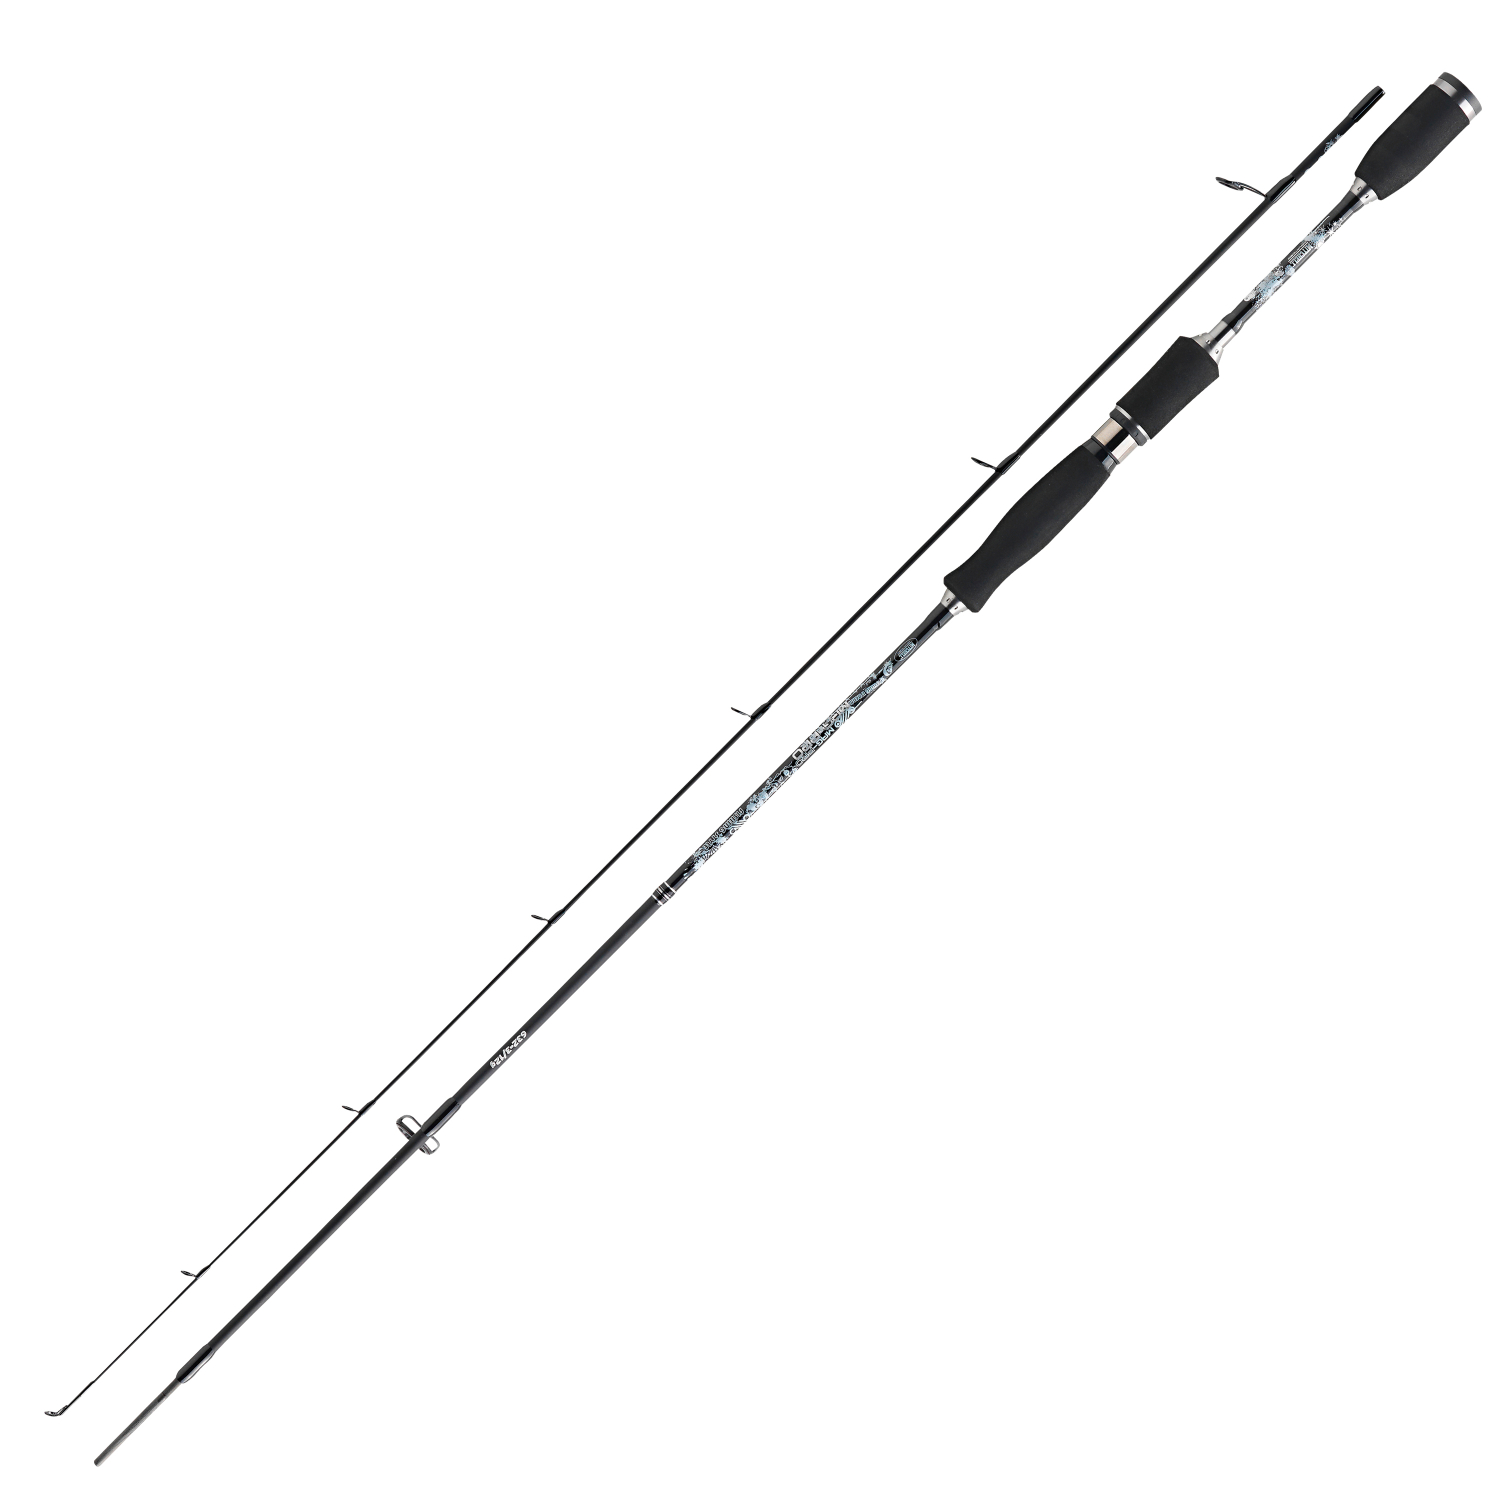 Mitchell Mitchell Mag Pro Advanced Spin Fishing Rod 